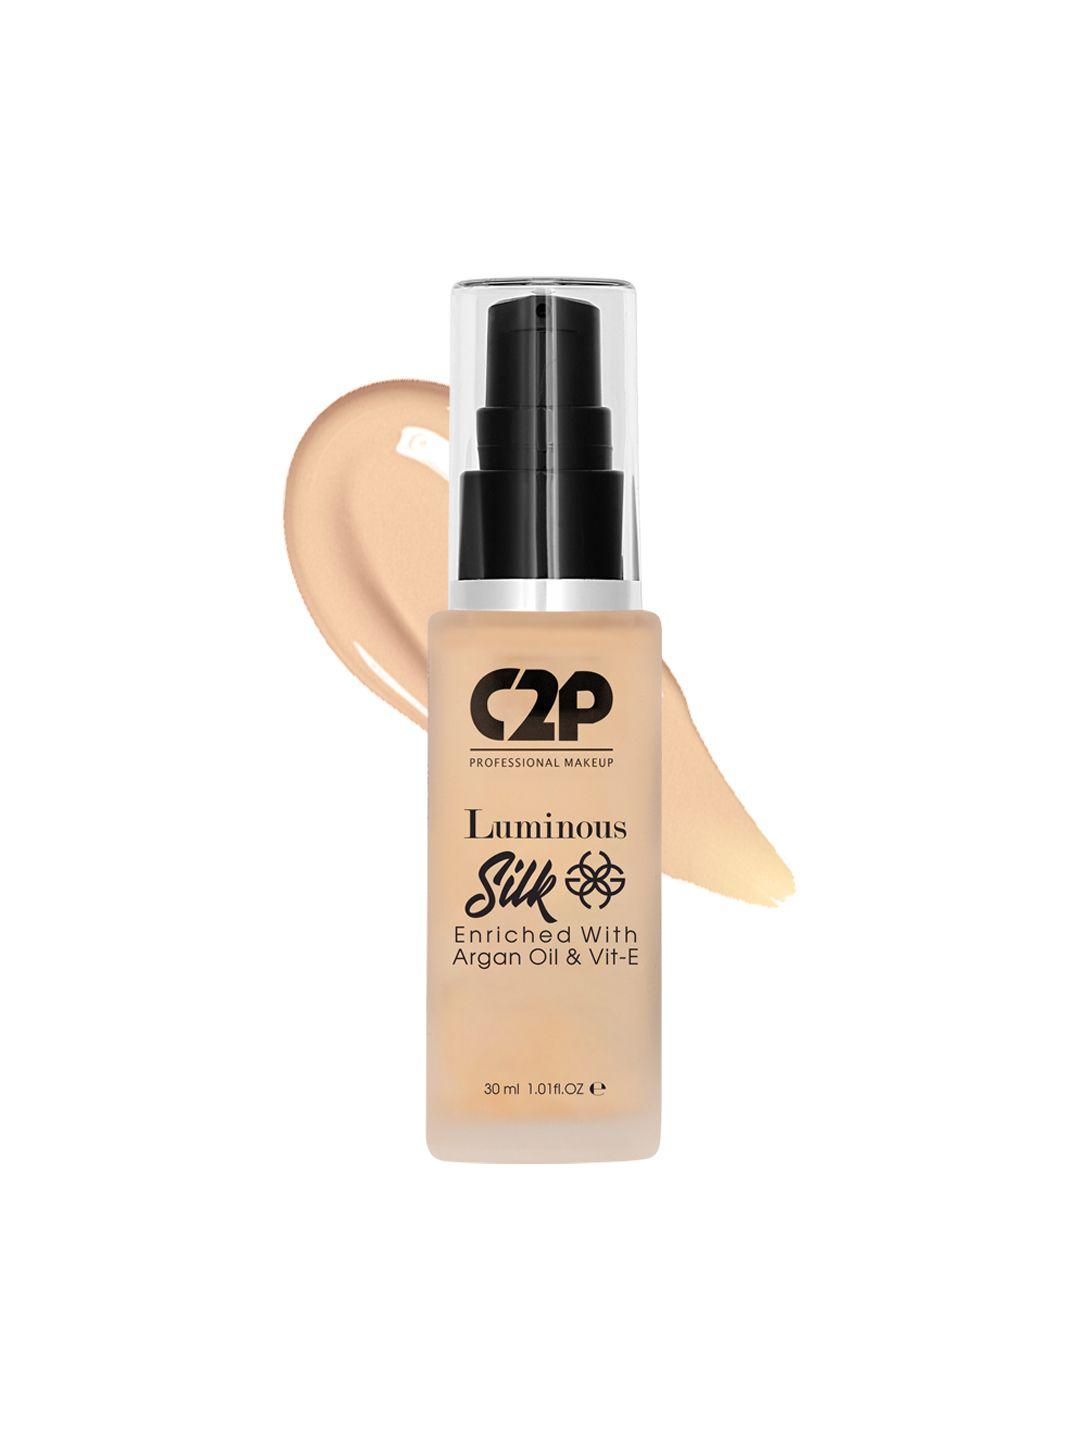 c2p professional makeup luminous silk liquid foundation with argan oil - medium tan 06